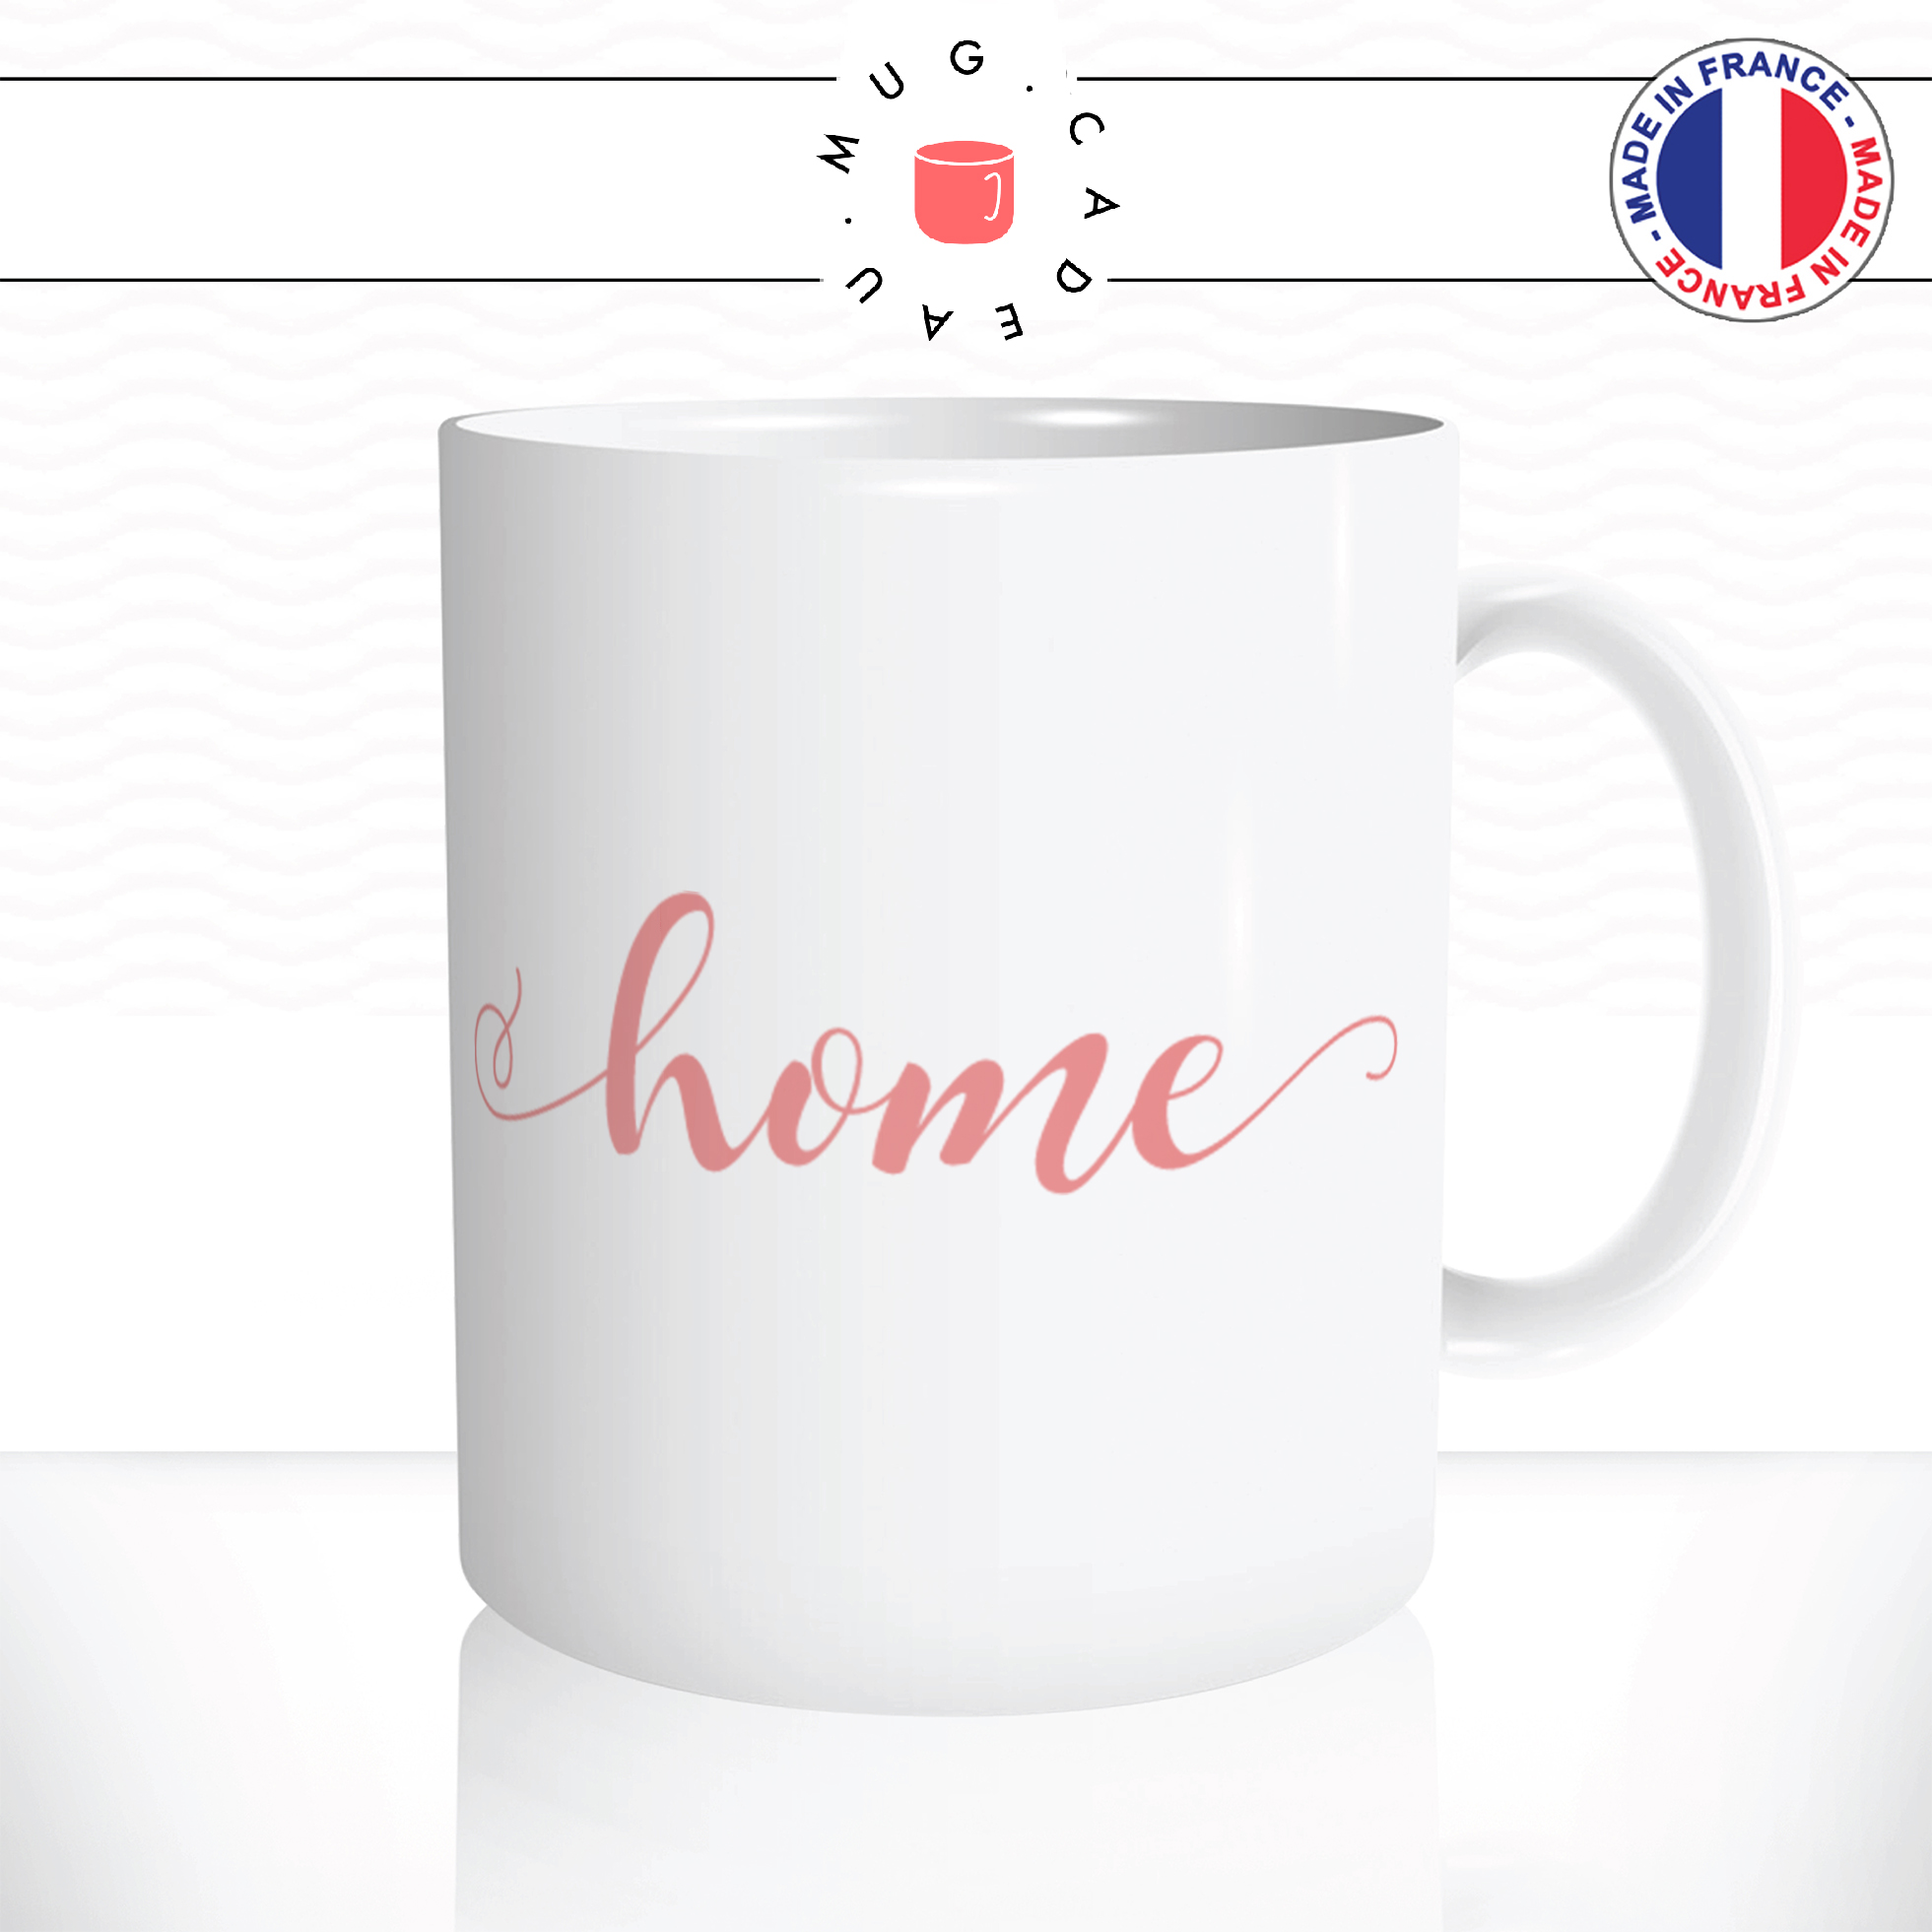 mug-tasse-ref34-citation-heureuse-home-ecriture-rose-cafe-the-mugs-tasses-personnalise-anse-droite